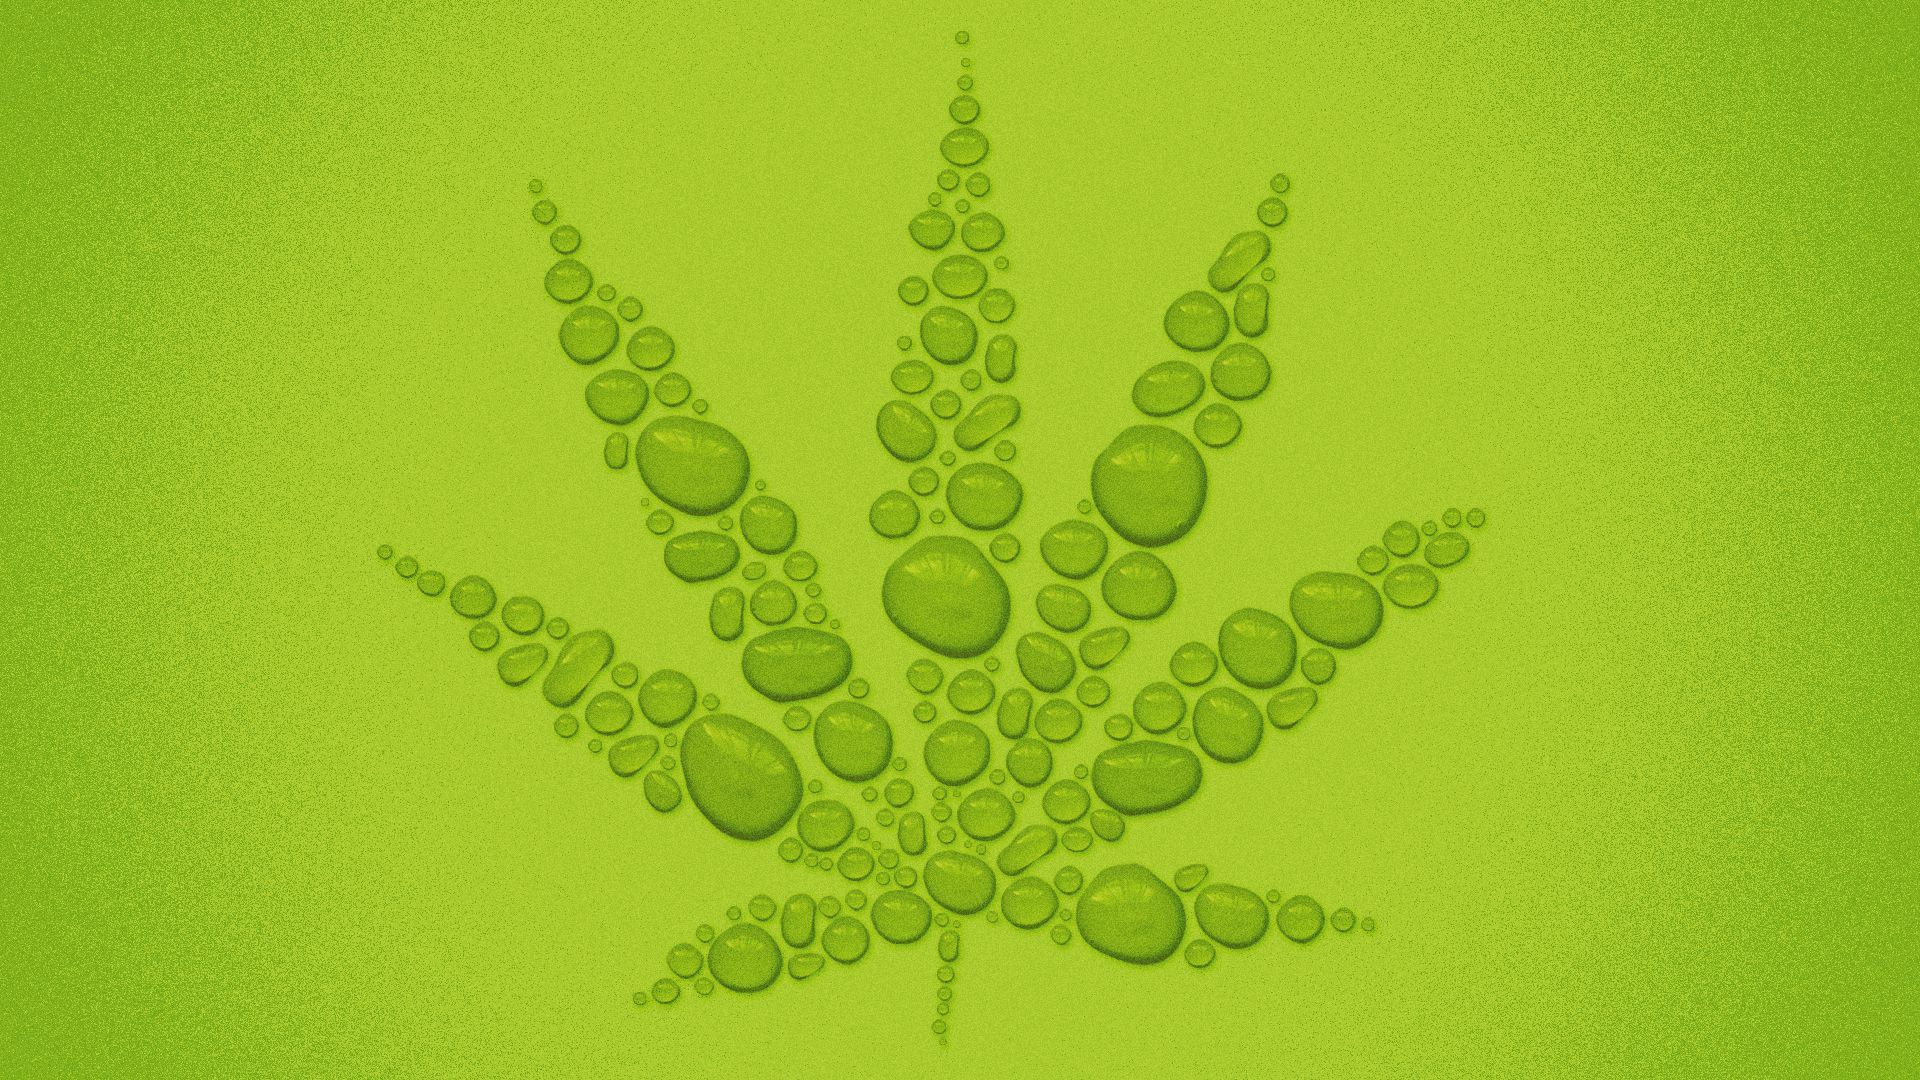 Illustration of water droplets making the shape of a marijuana leaf. 